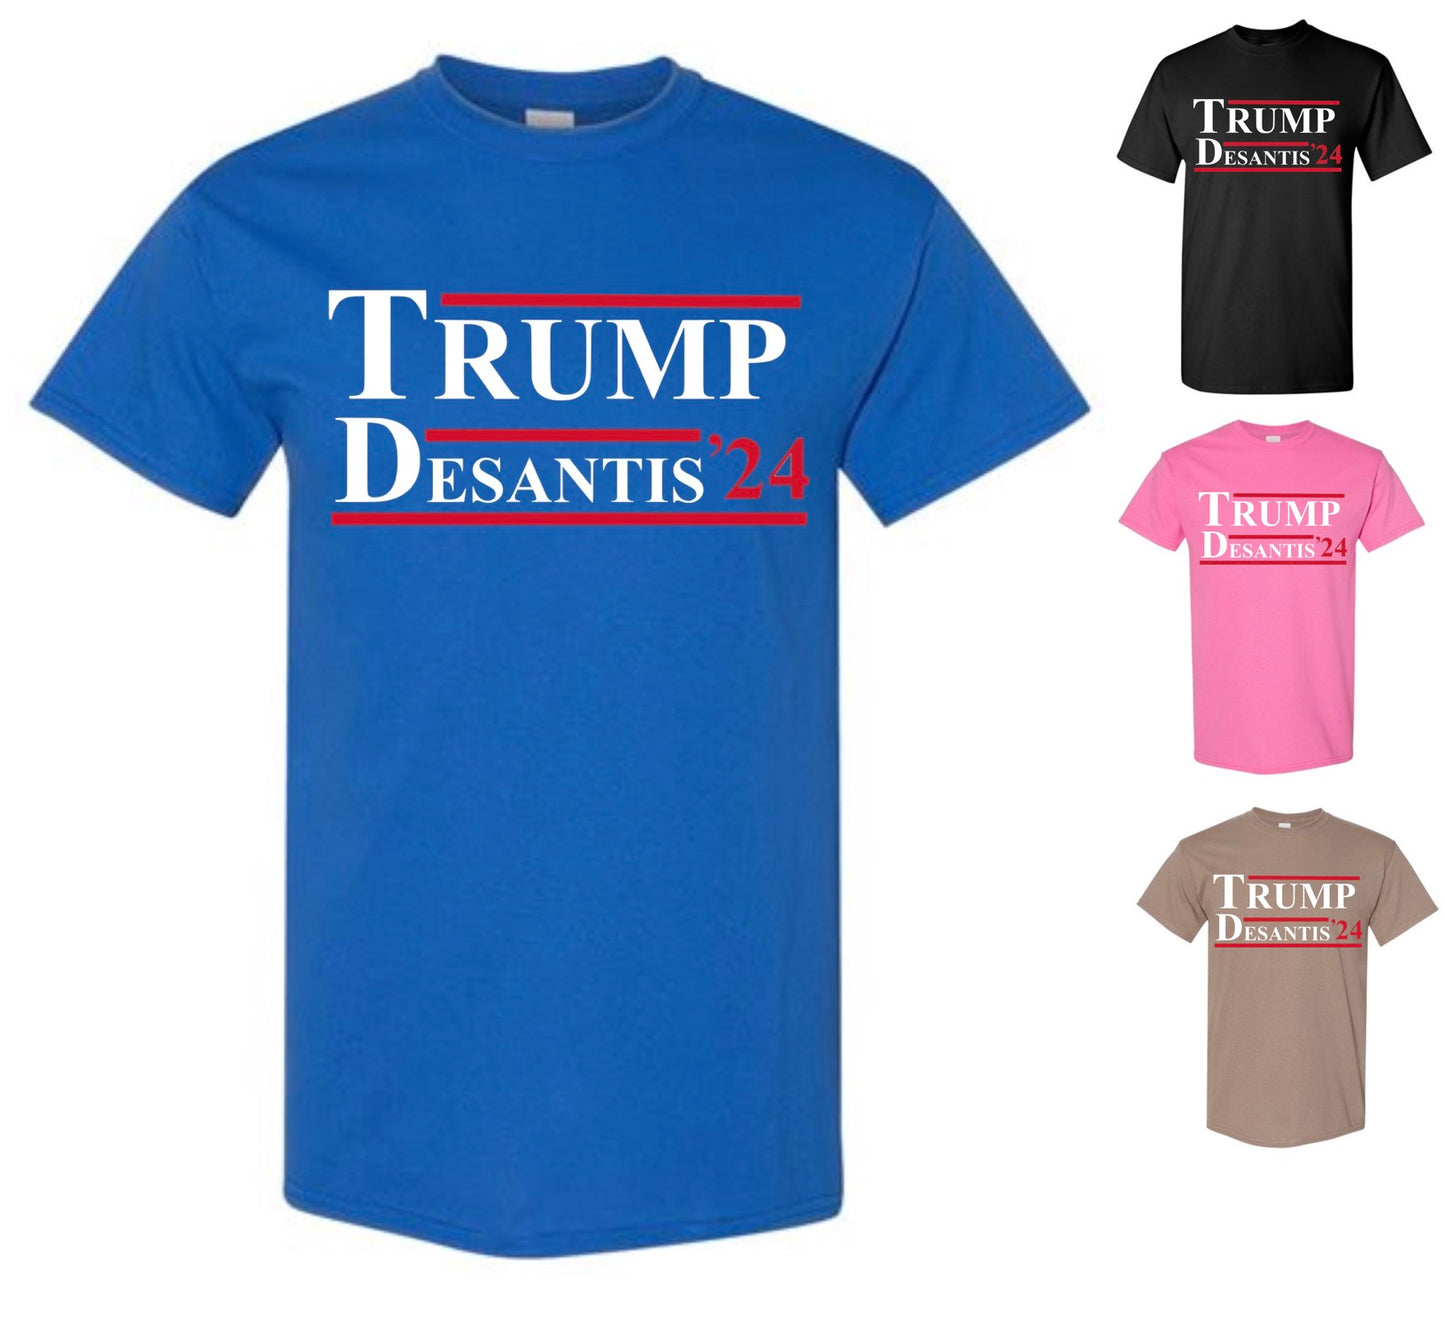 Trump DeSantis 2024 T-Shirt — Just Pay Shipping